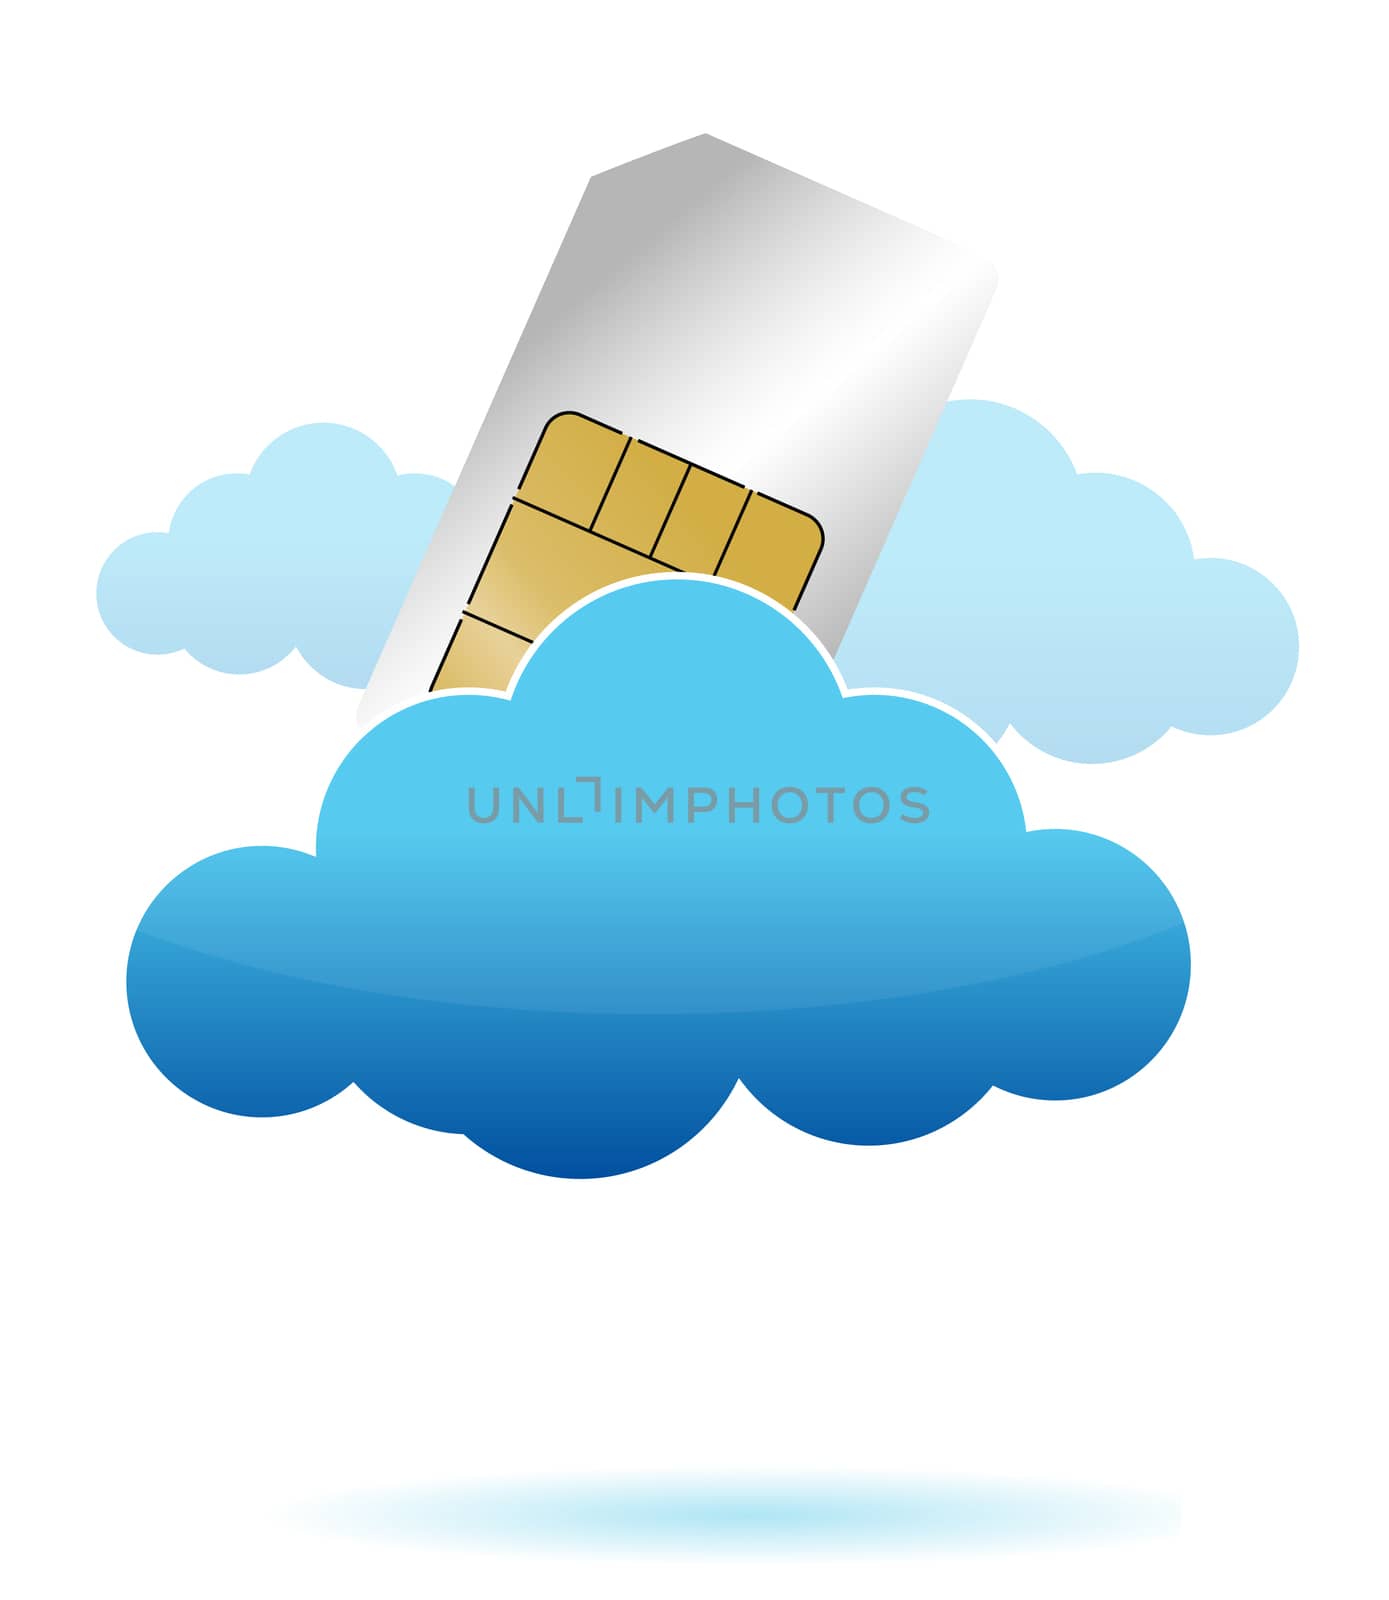 SIM card in the cloud illustration design